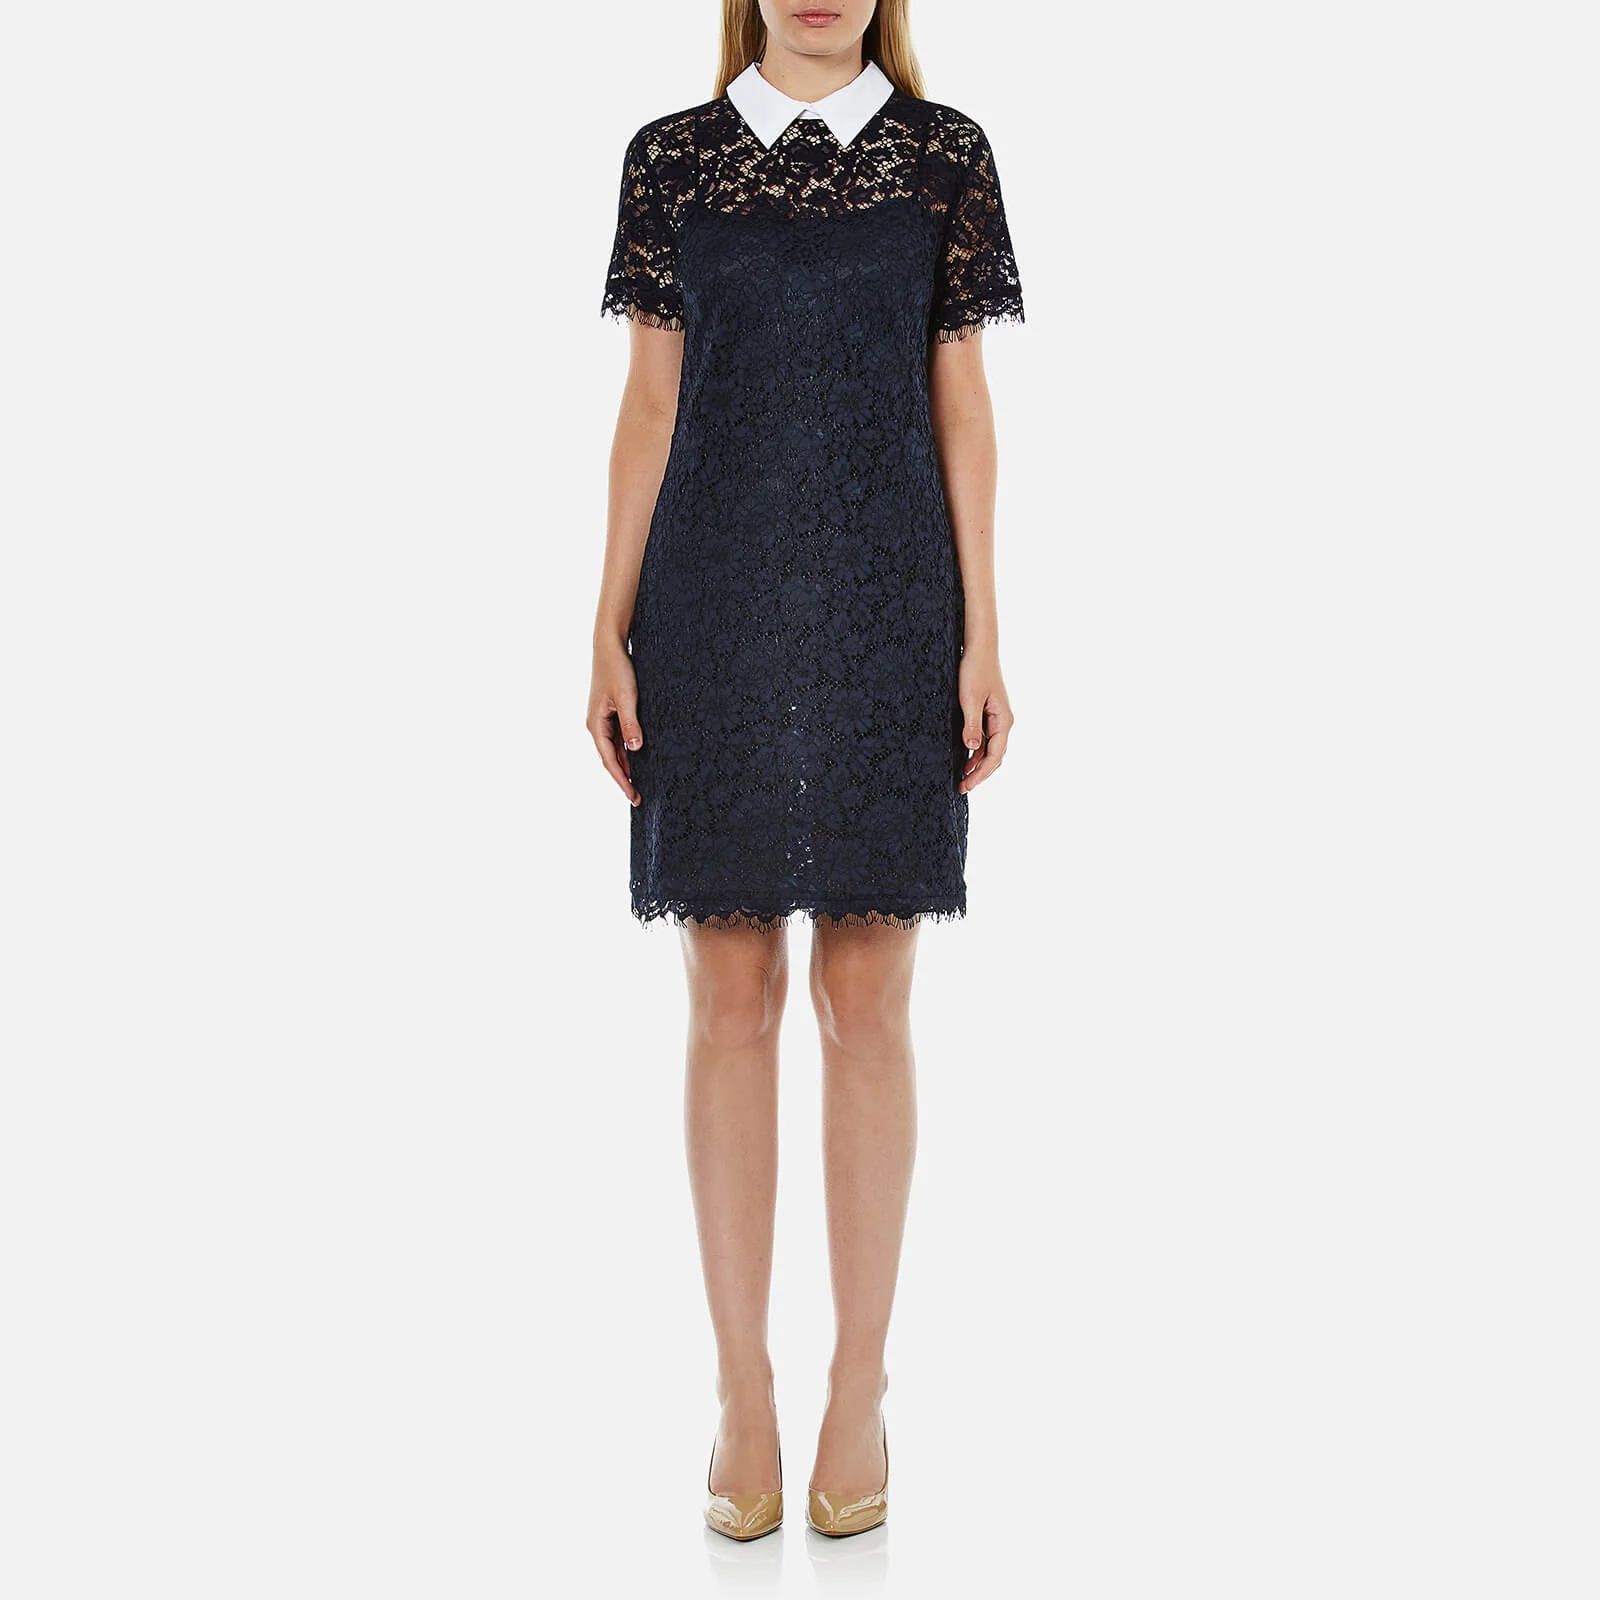 MICHAEL MICHAEL KORS Women's Collar Lace T-Shirt Dress - New Navy Image 1